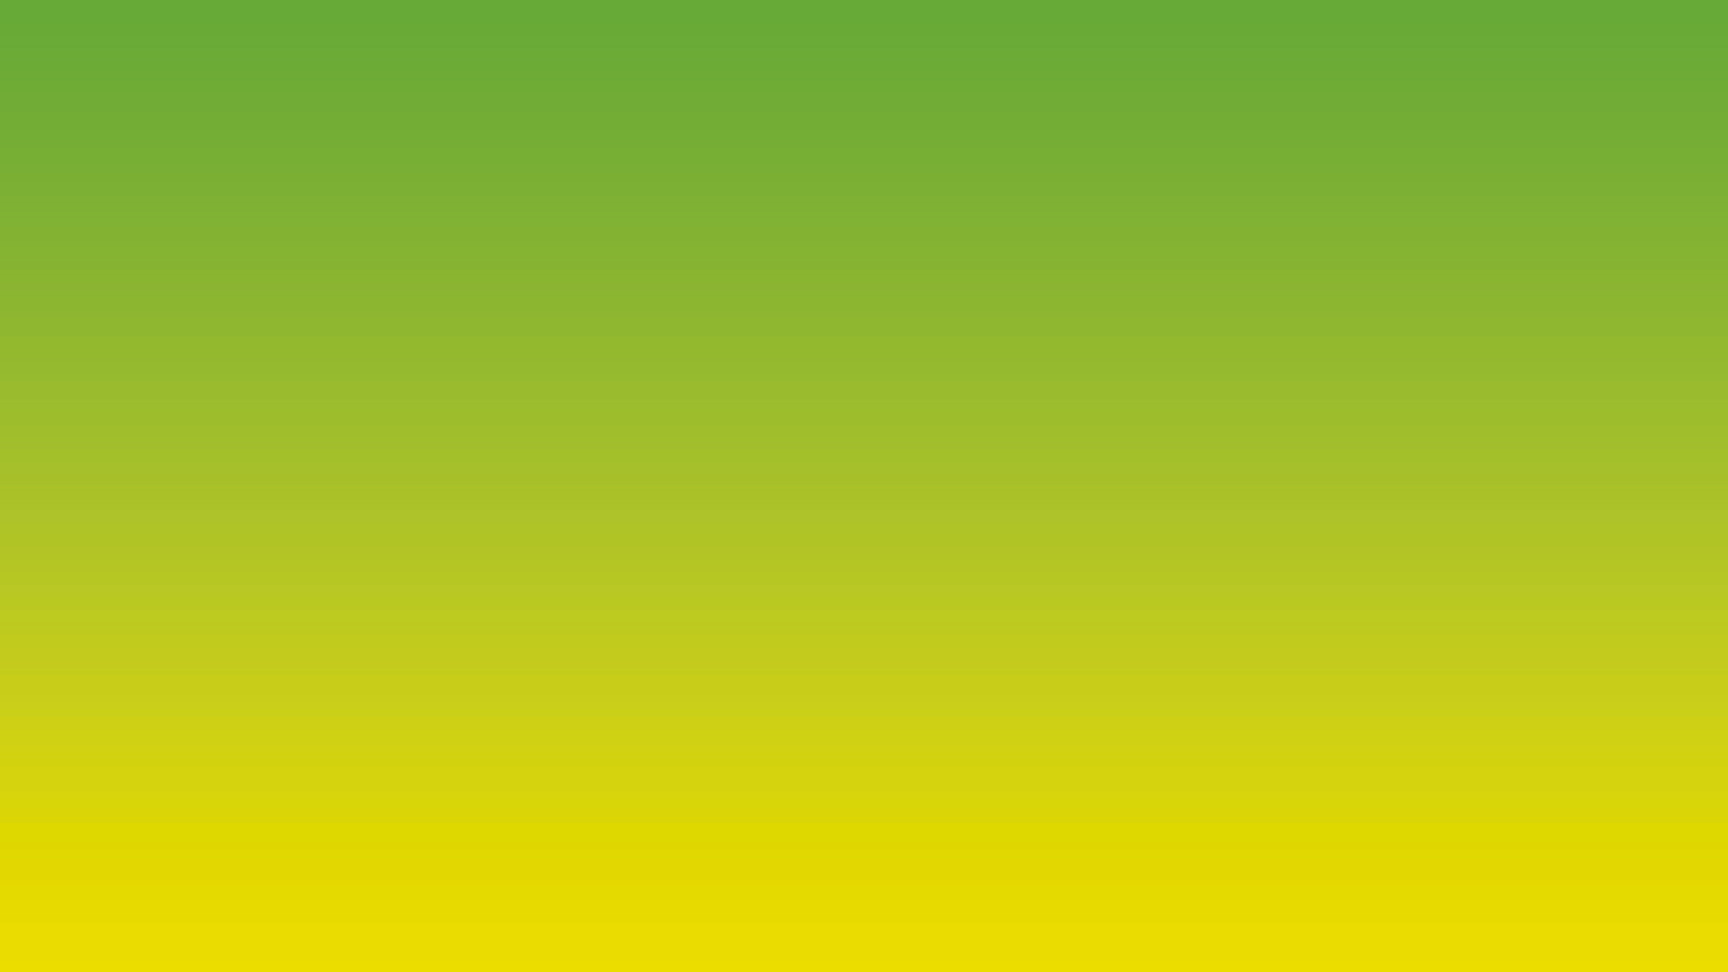 Green & Yellow Gradient Background